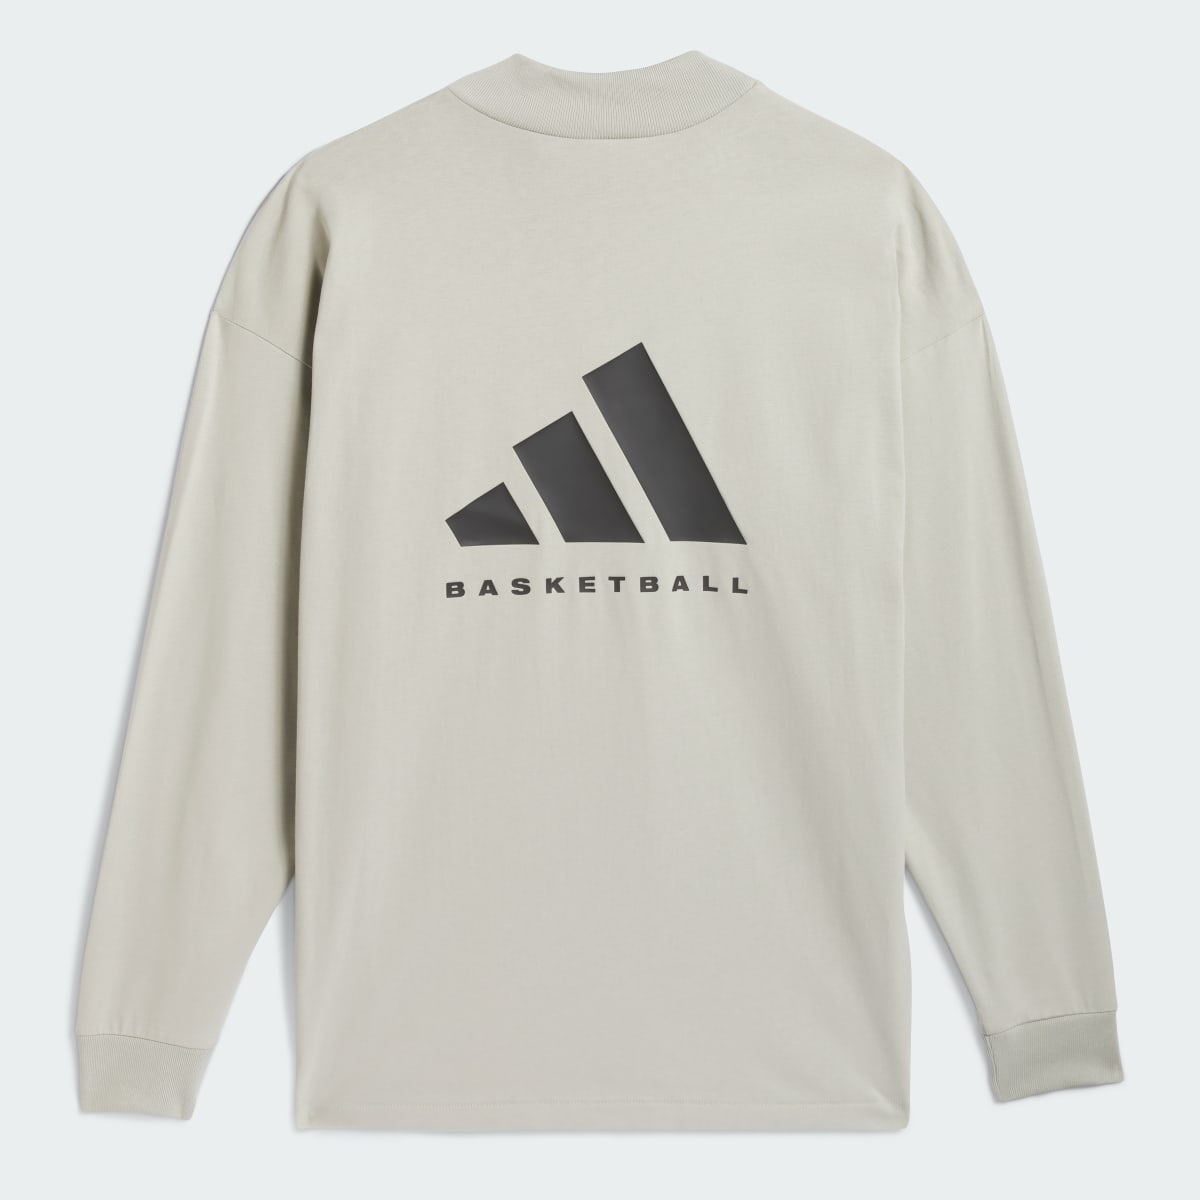 Adidas Basketball Long-Sleeve Top. 5